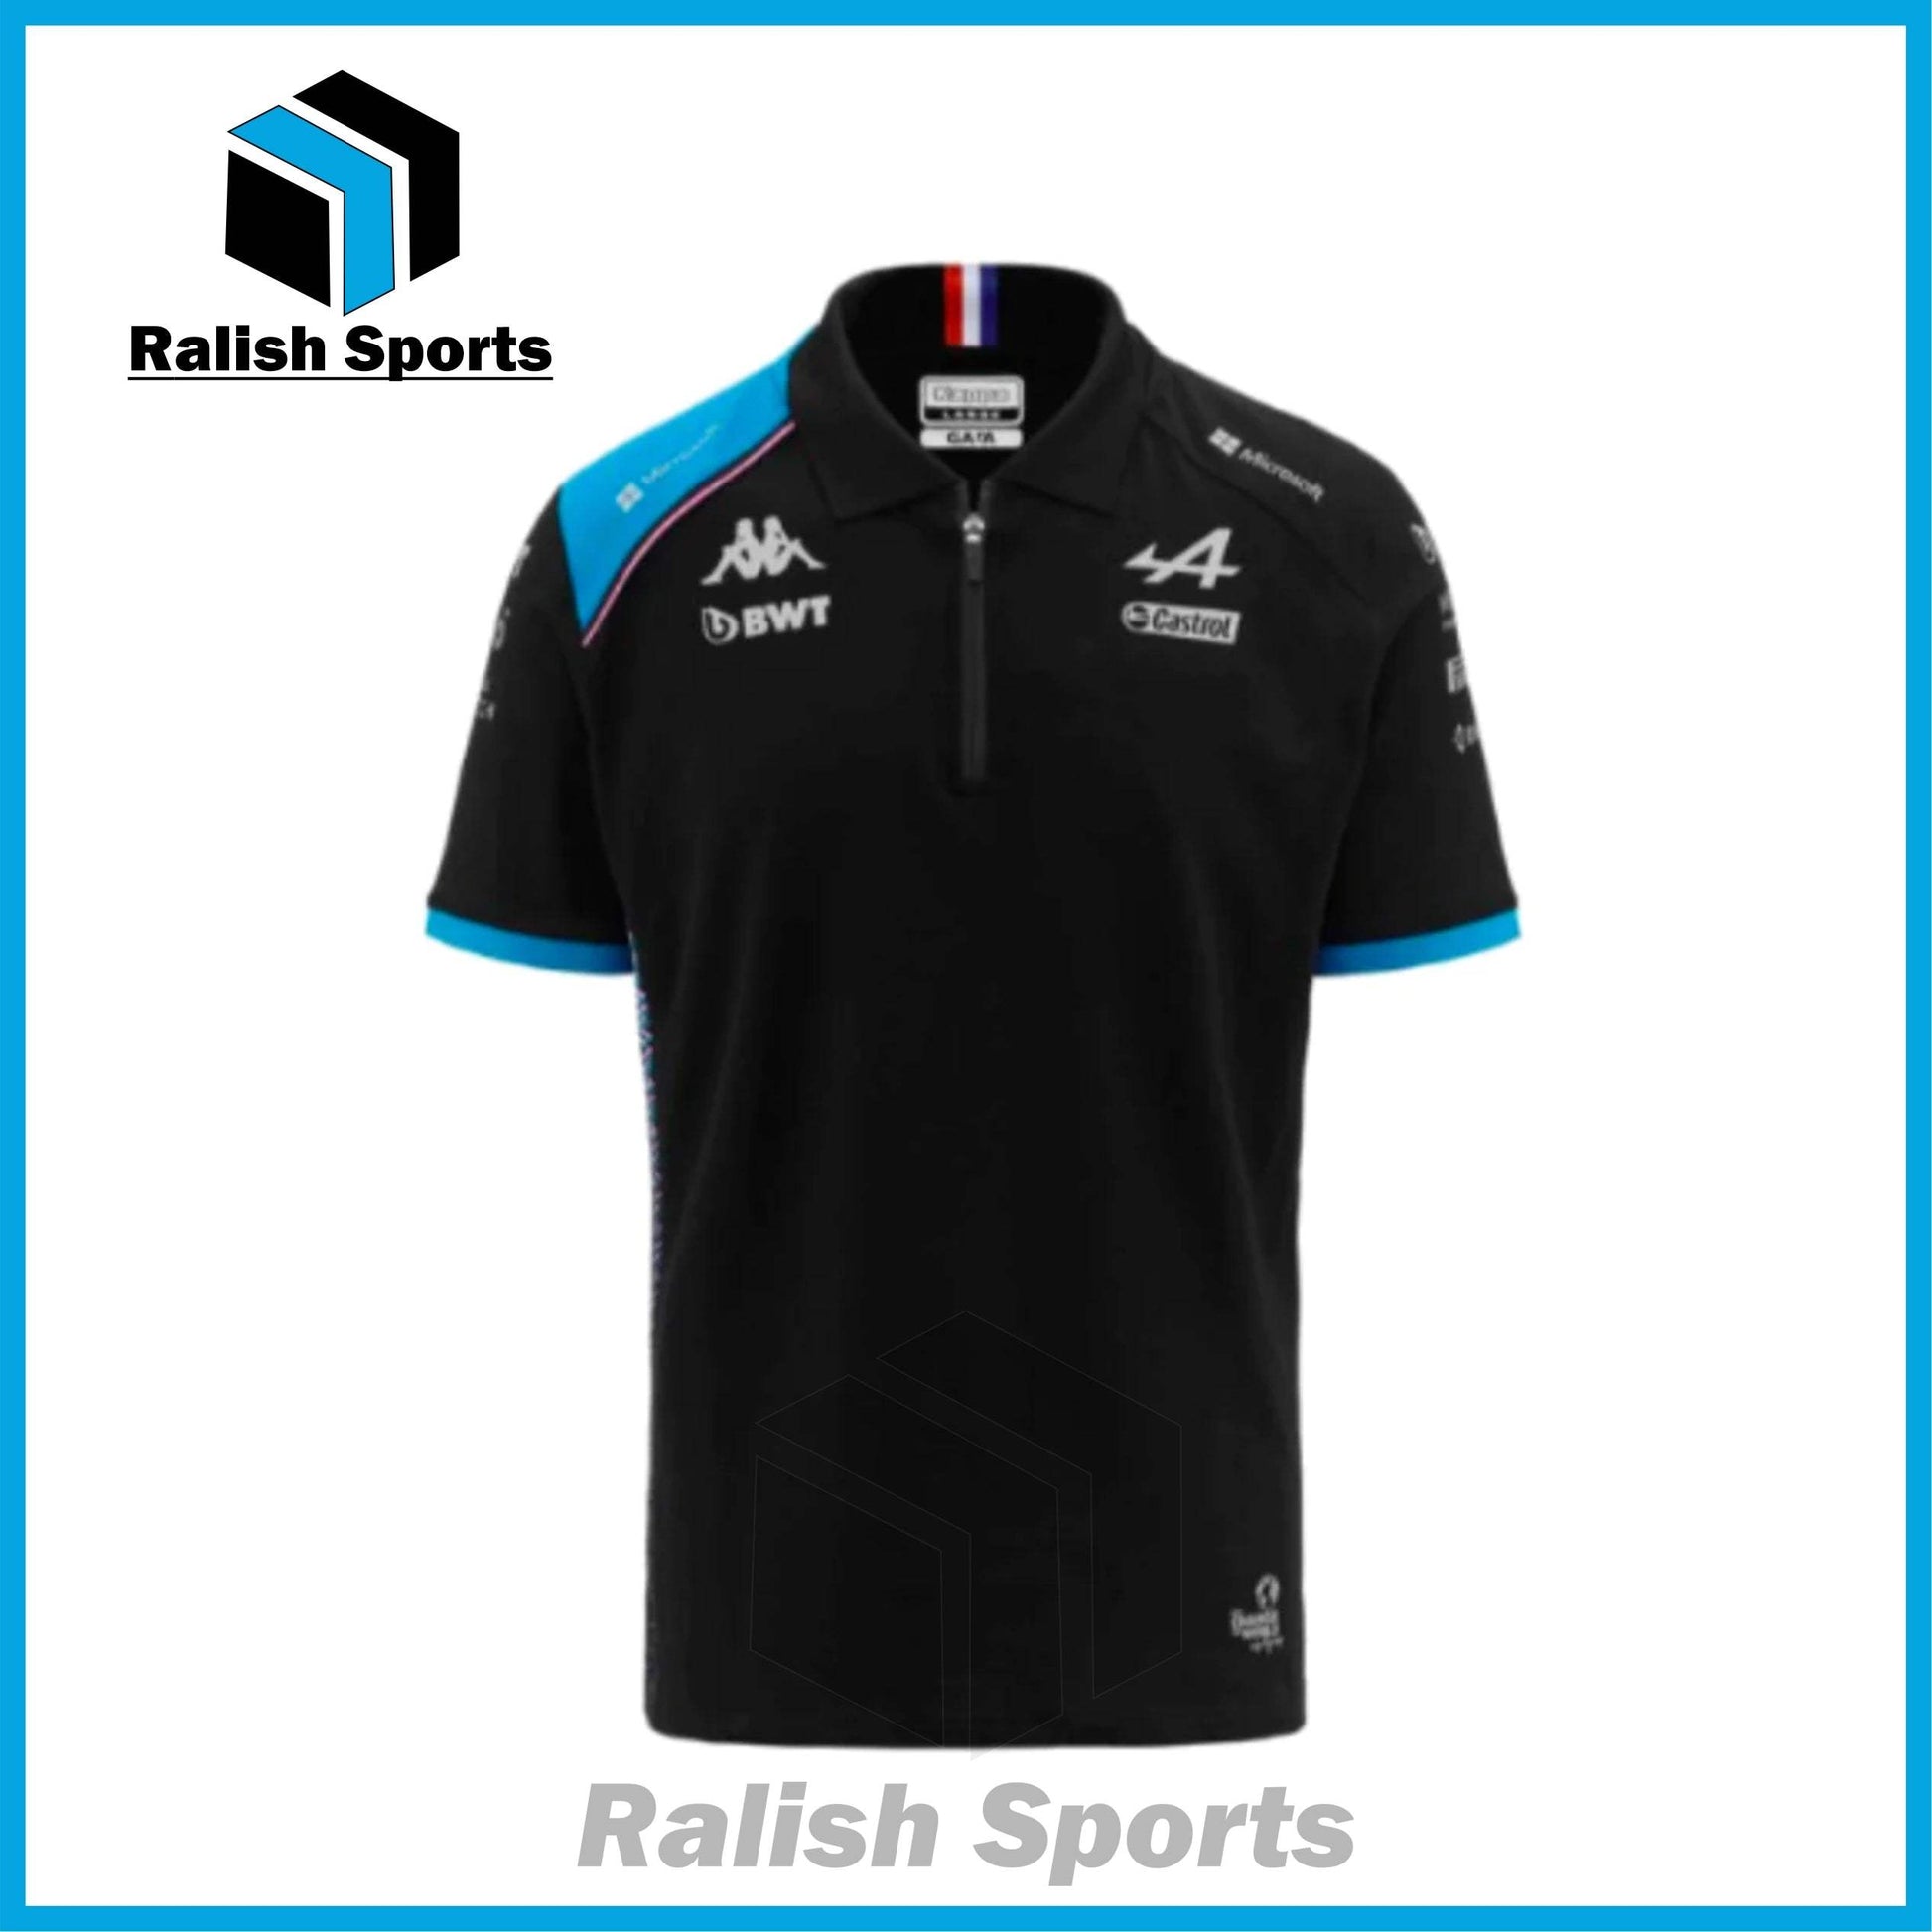 2023 Alpine Team Pierre Gasly Polo - Ralish Sports